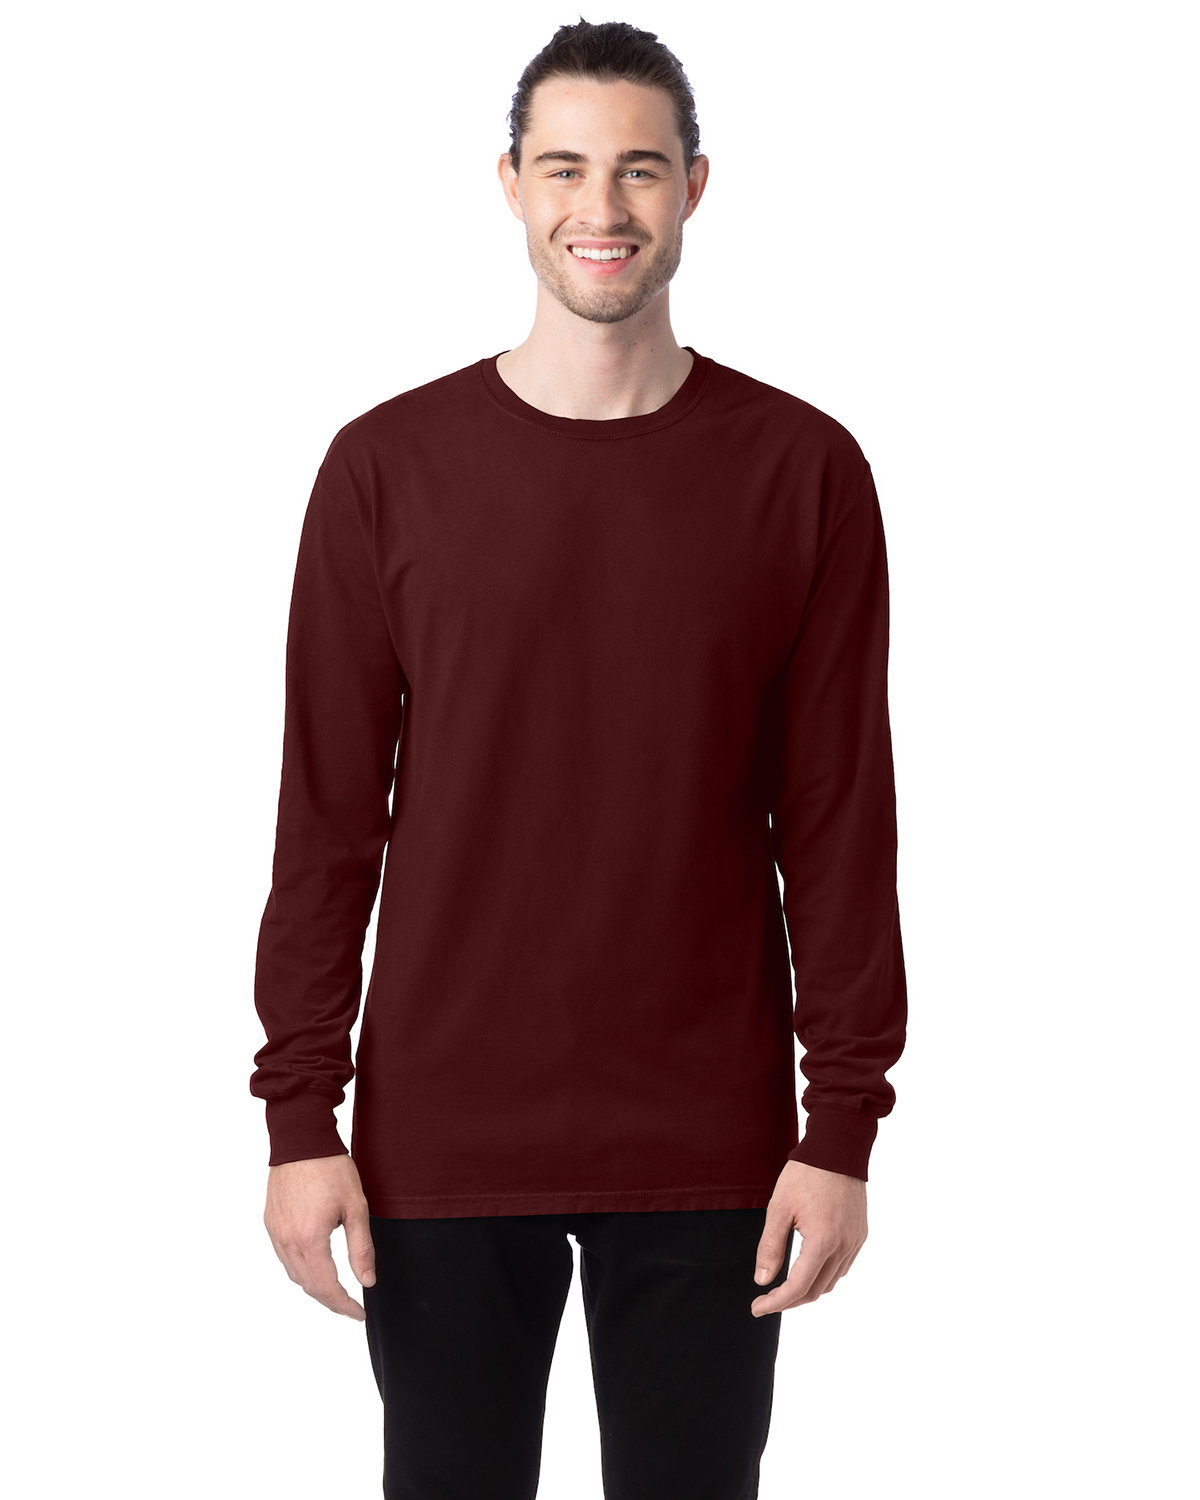 ComfortWash by Hanes Unisex Garment-Dyed Long-Sleeve T-Shirt MAROON 